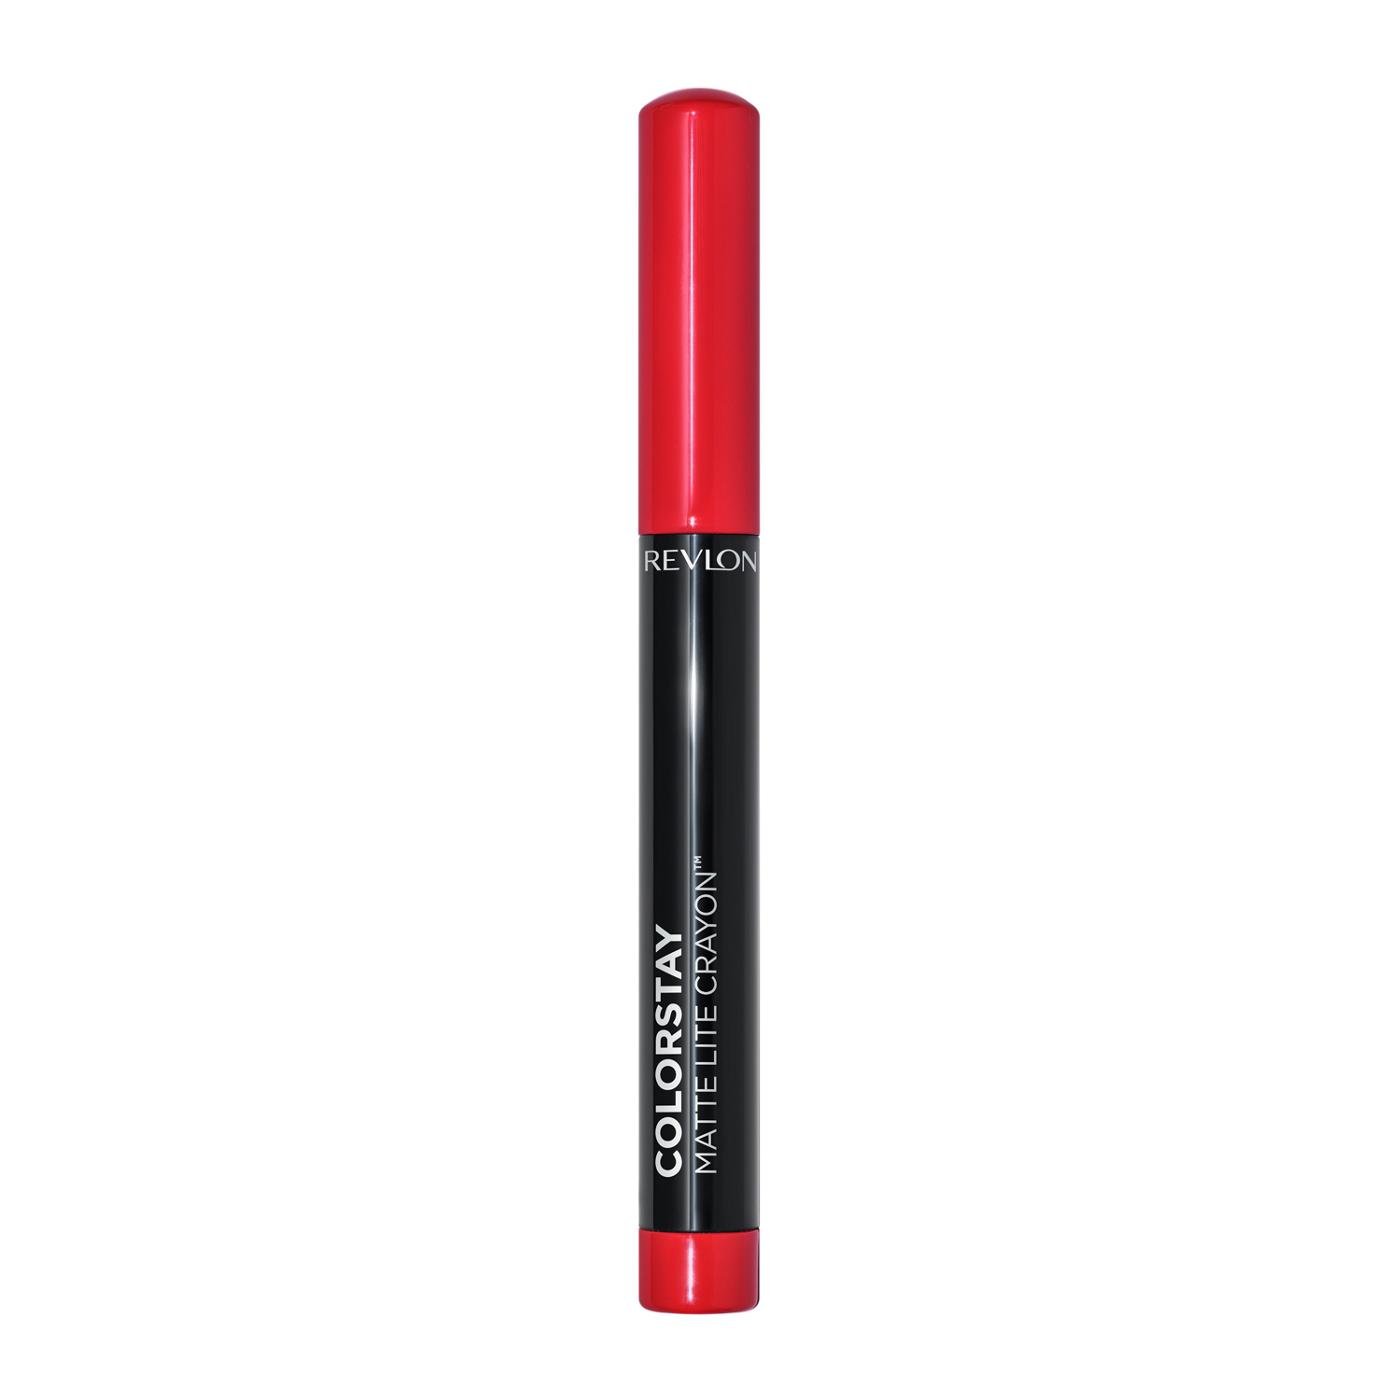 Revlon ColorStay Matte Lite Crayon Lipstick - Air Kiss; image 1 of 7